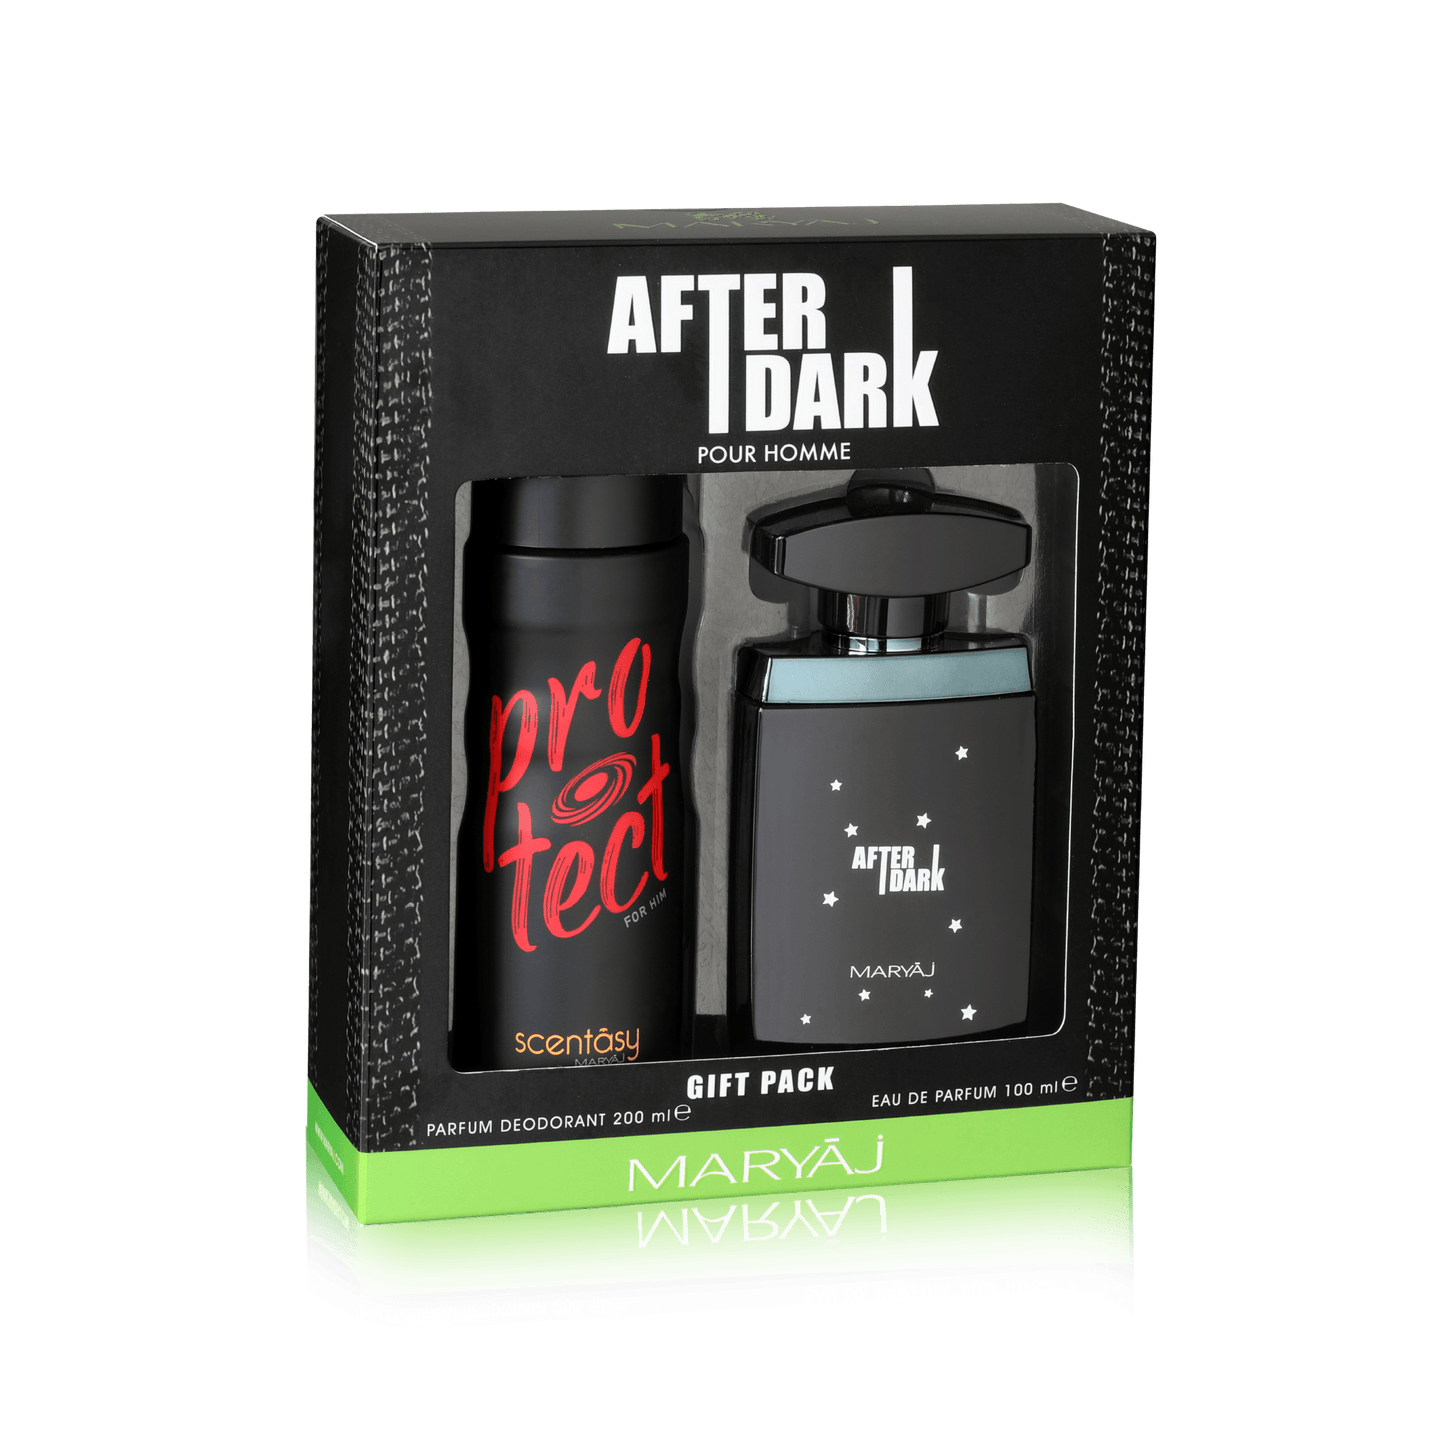 After Dark Perfume Gift Set for Men (Eau de Parfum Spray 100ml + Protect Perfume Body Spray 200ml)